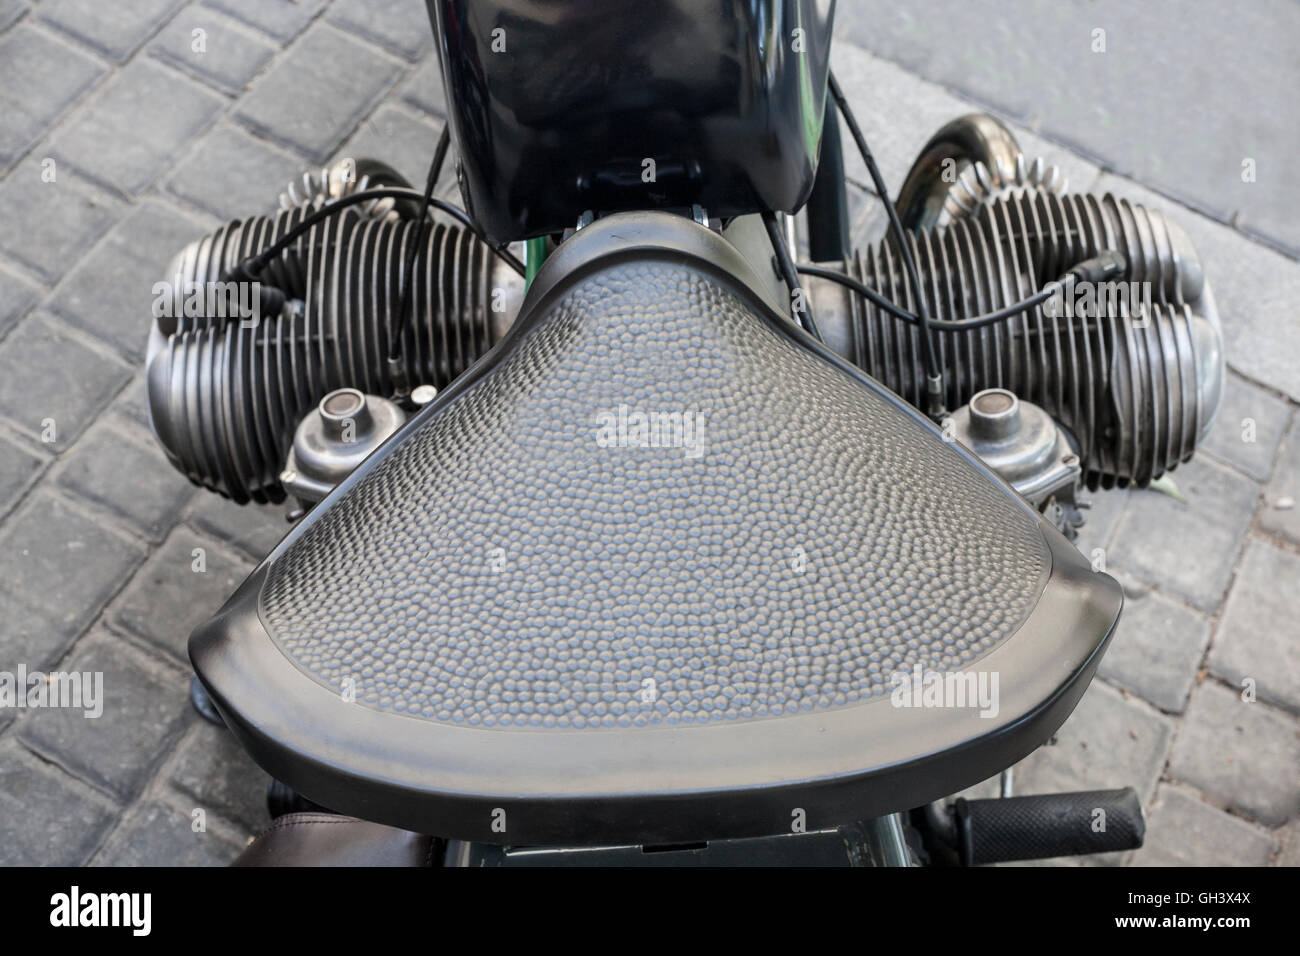 Alte Motorrad-Vintage-Leder-Sattel über Pflaster Hintergrund Stockfoto